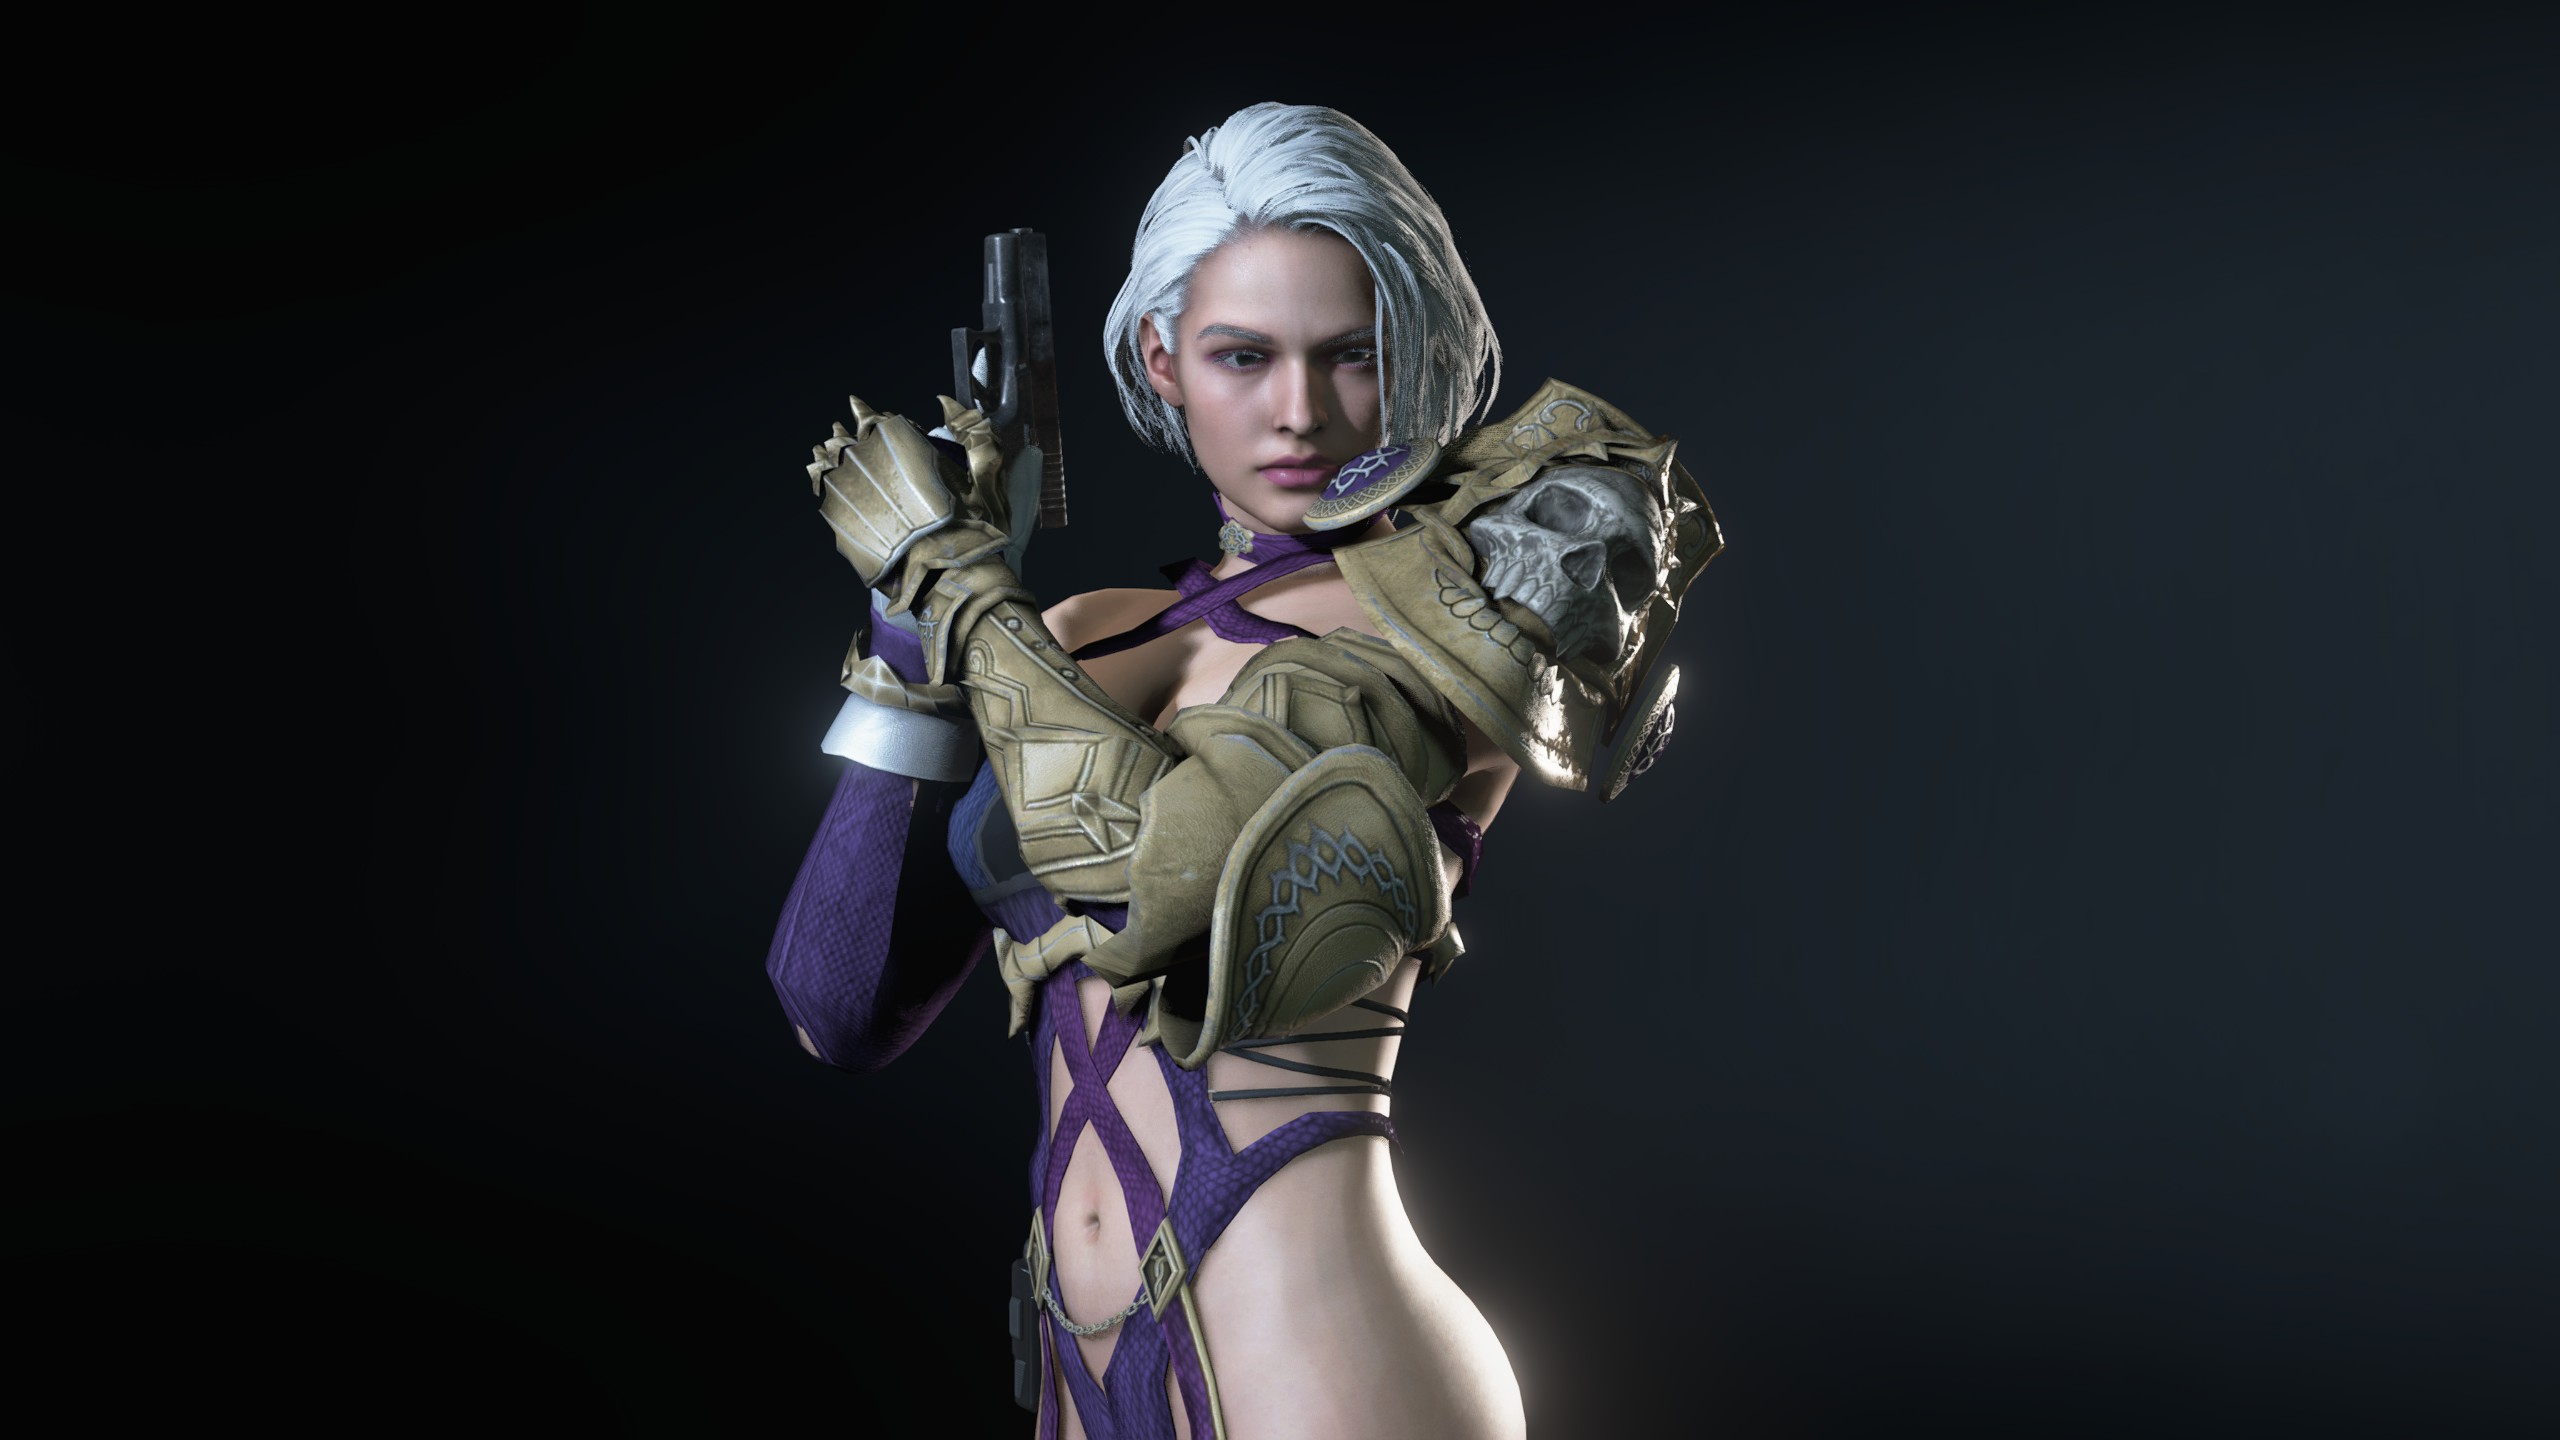 Jill Ivy Valentine cosplay V2.0 update